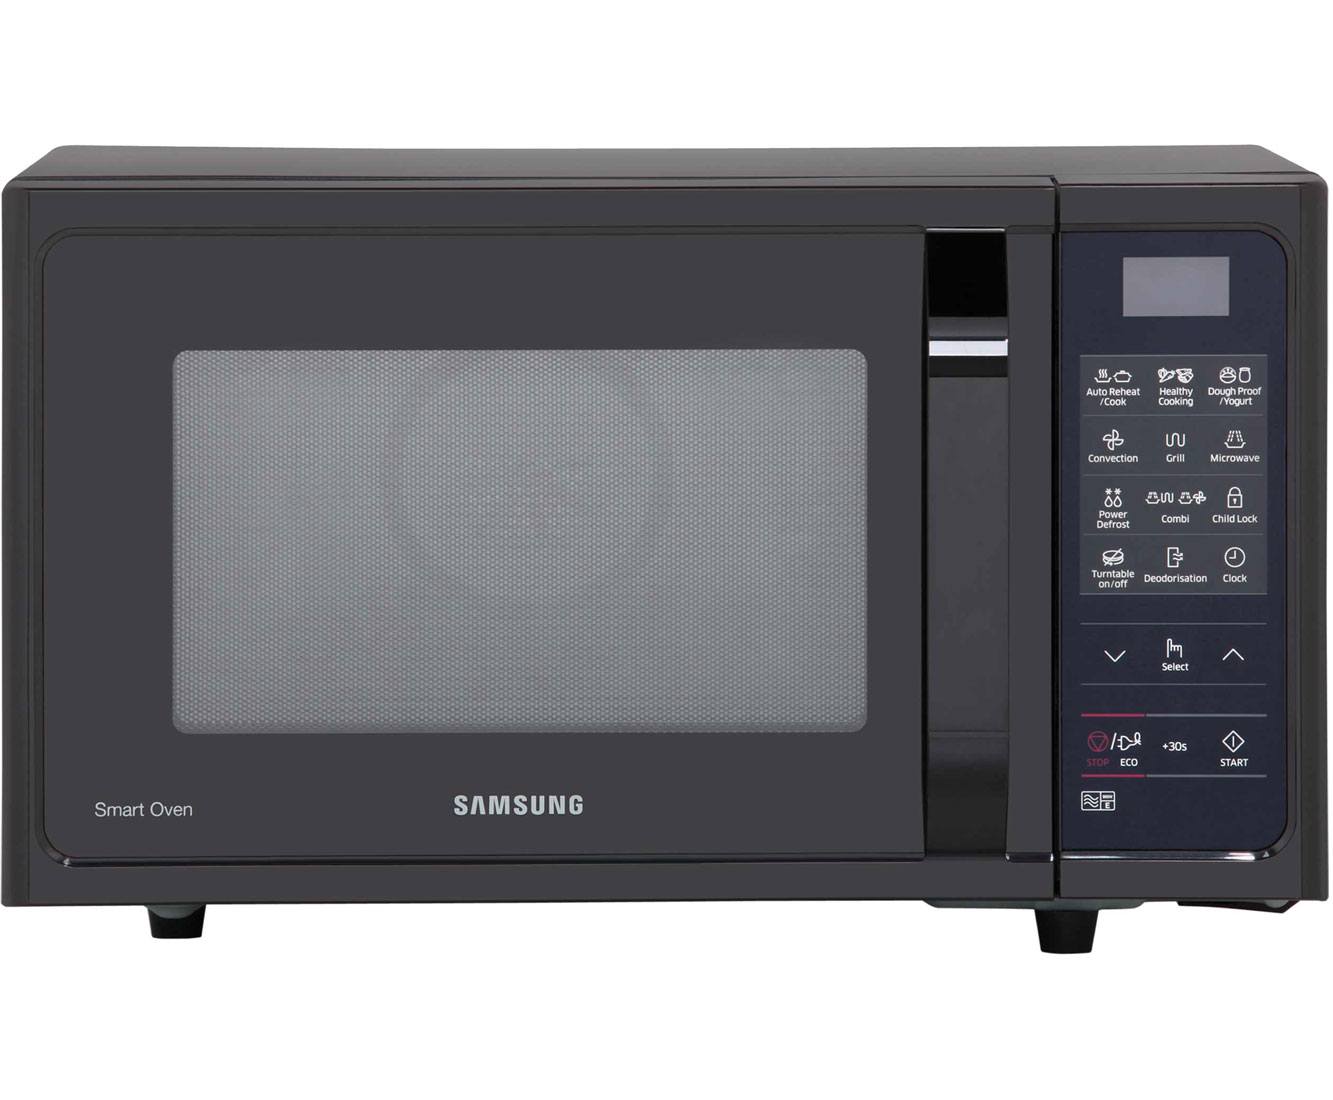 Samsung Smart Oven MC28H5013AK 28 Litre Combination Microwave Oven - Black